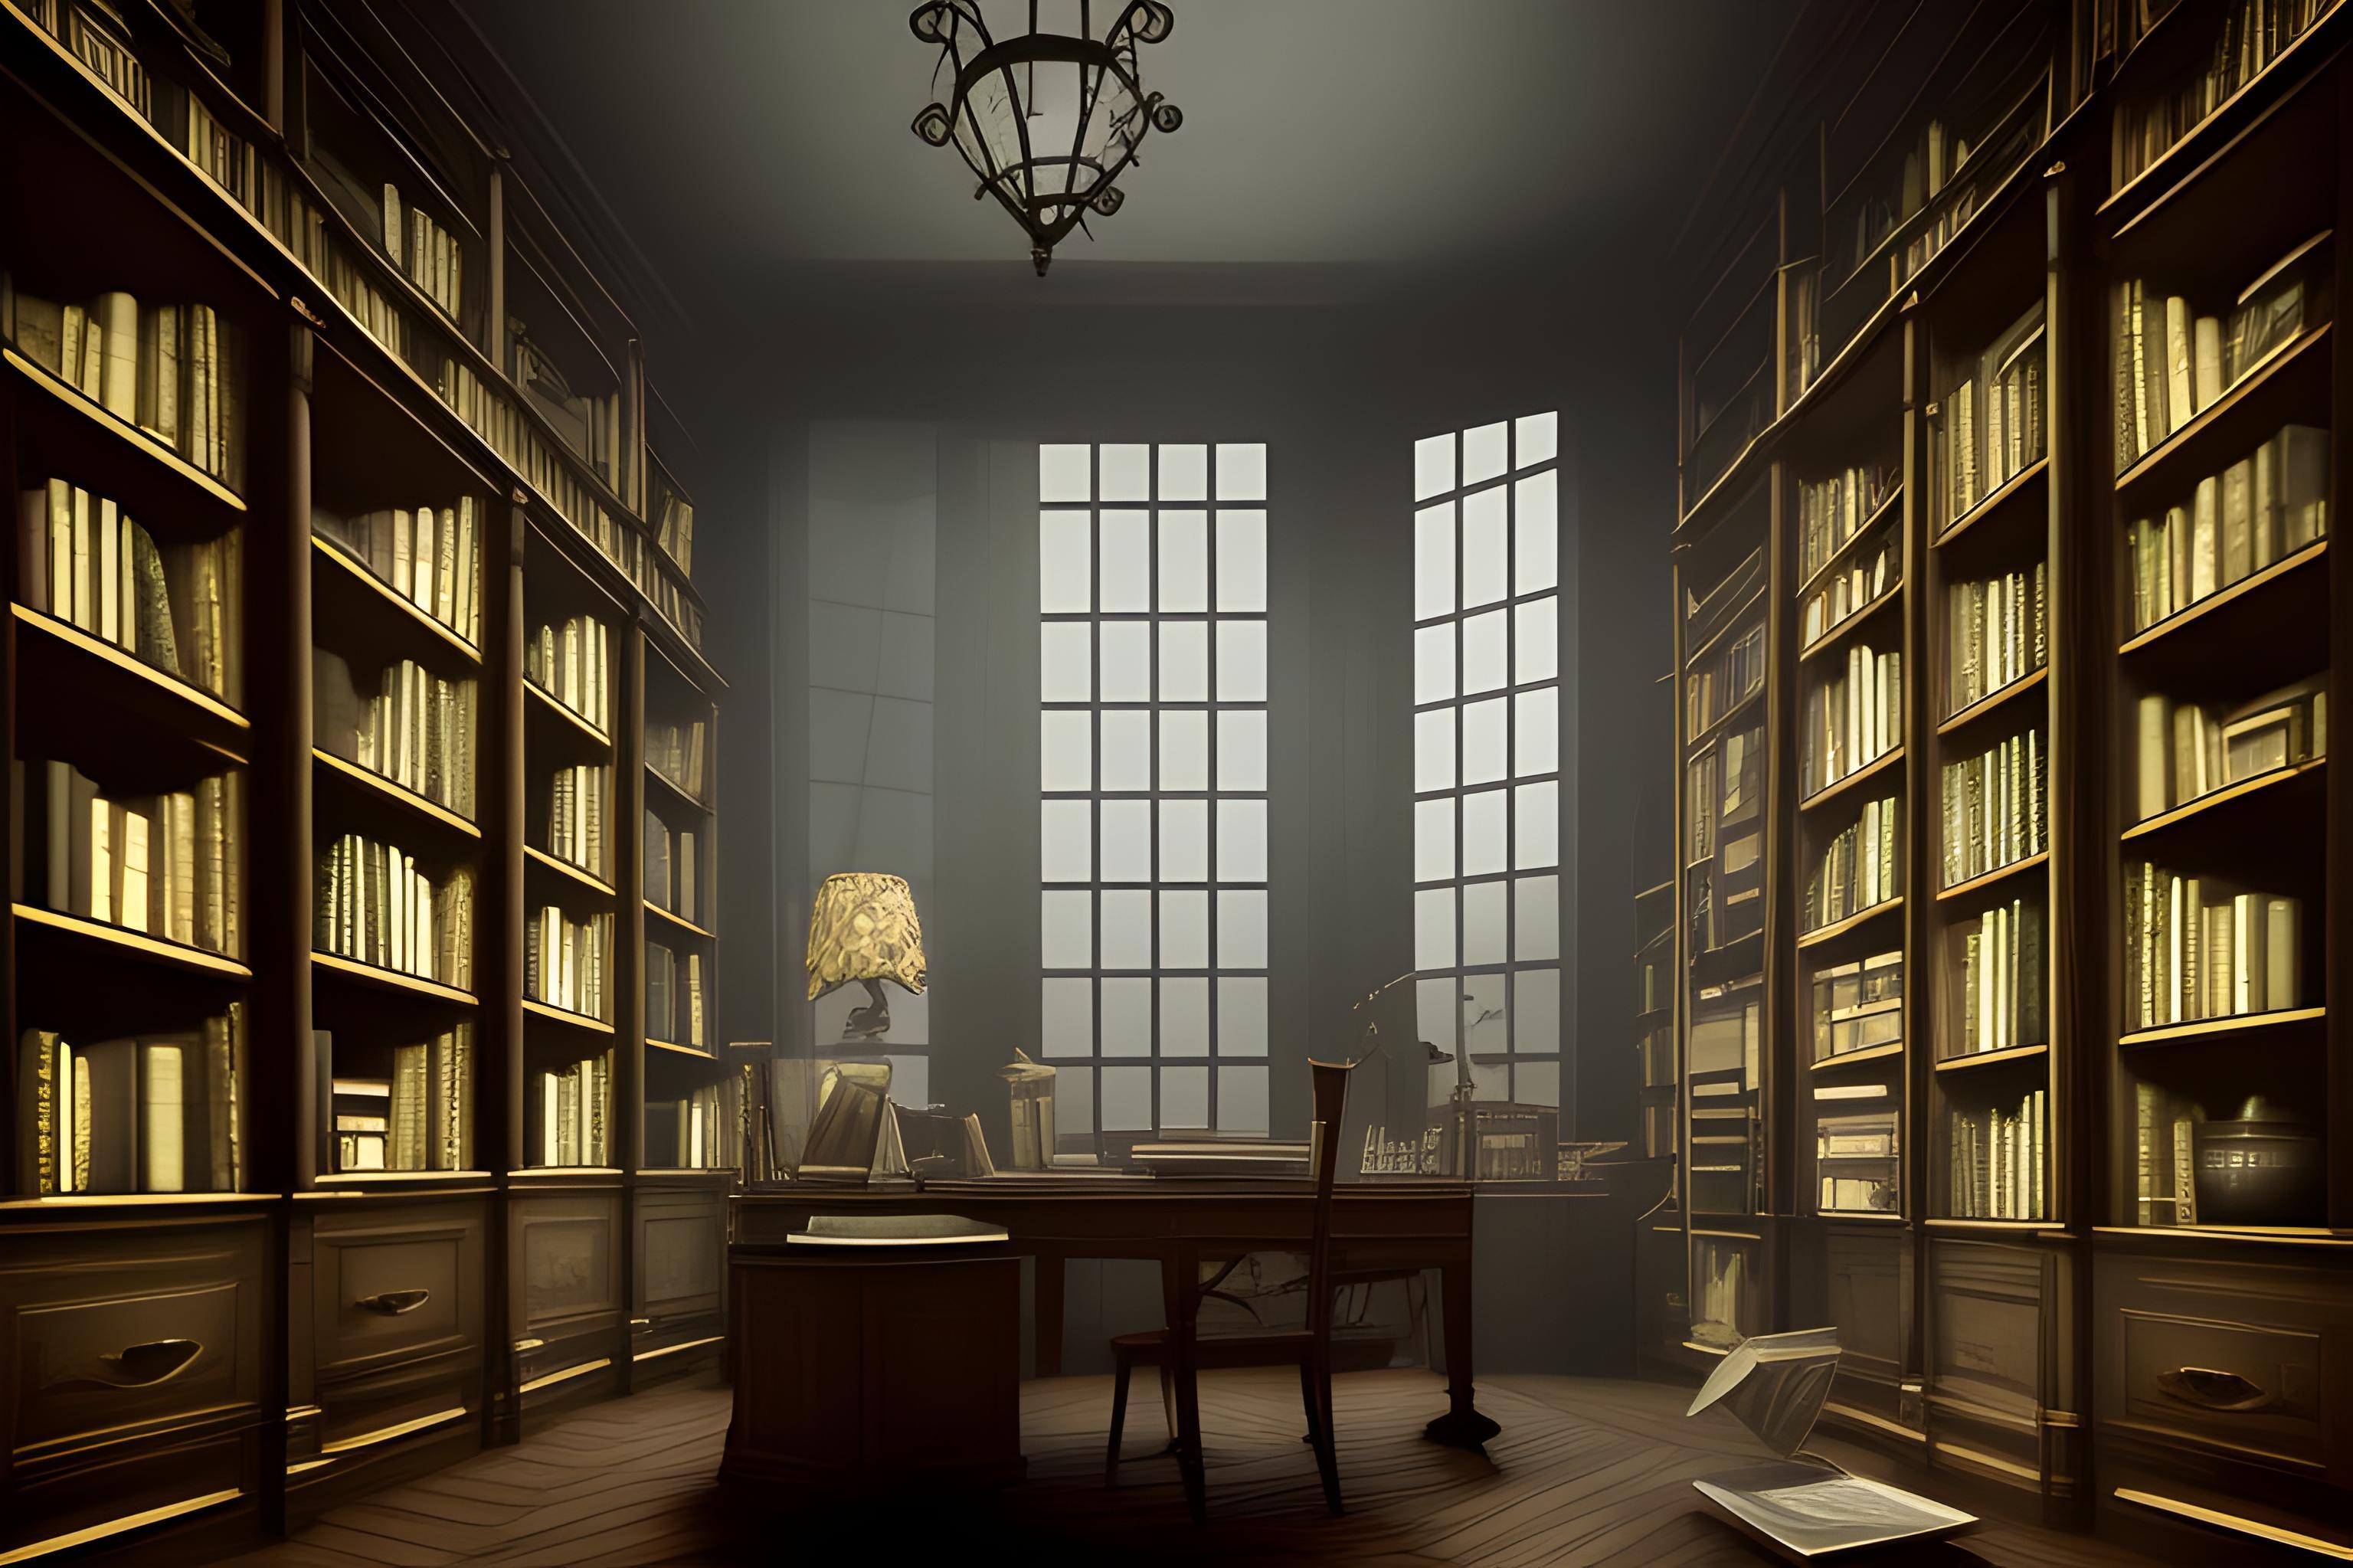 Dark Academia Cozy Room With A Desk And Shelf Books